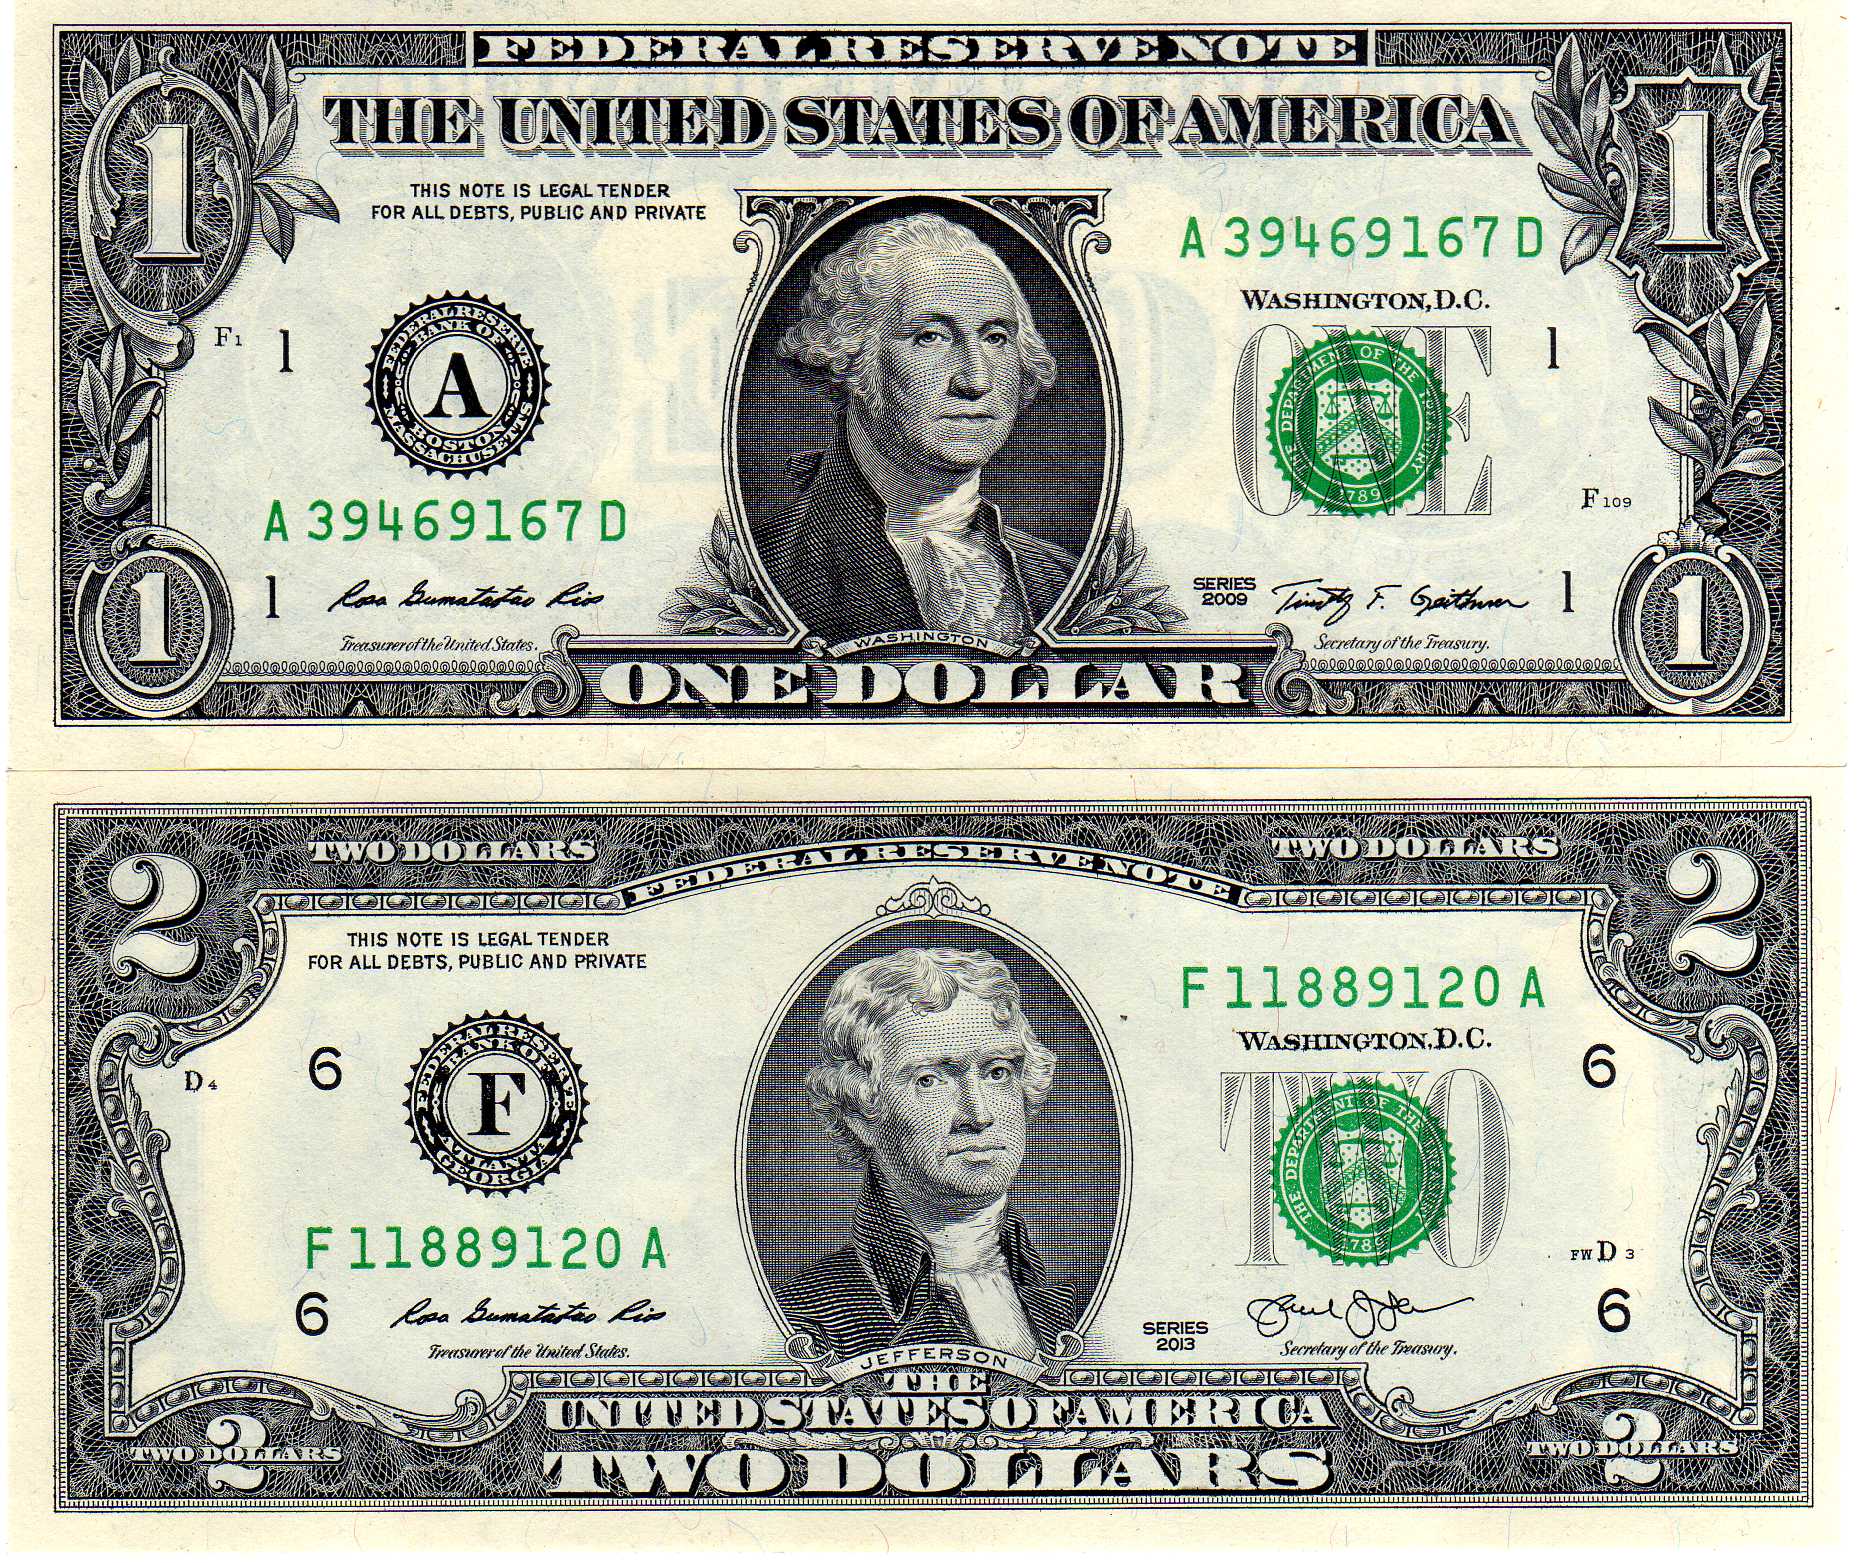 Нужен 1 доллар. Банкнота 1 доллар США нового образца. Банкнота 2 доллара. Доллар США банкнота 2 доллара. Редкие долларовые купюры 1 доллар.